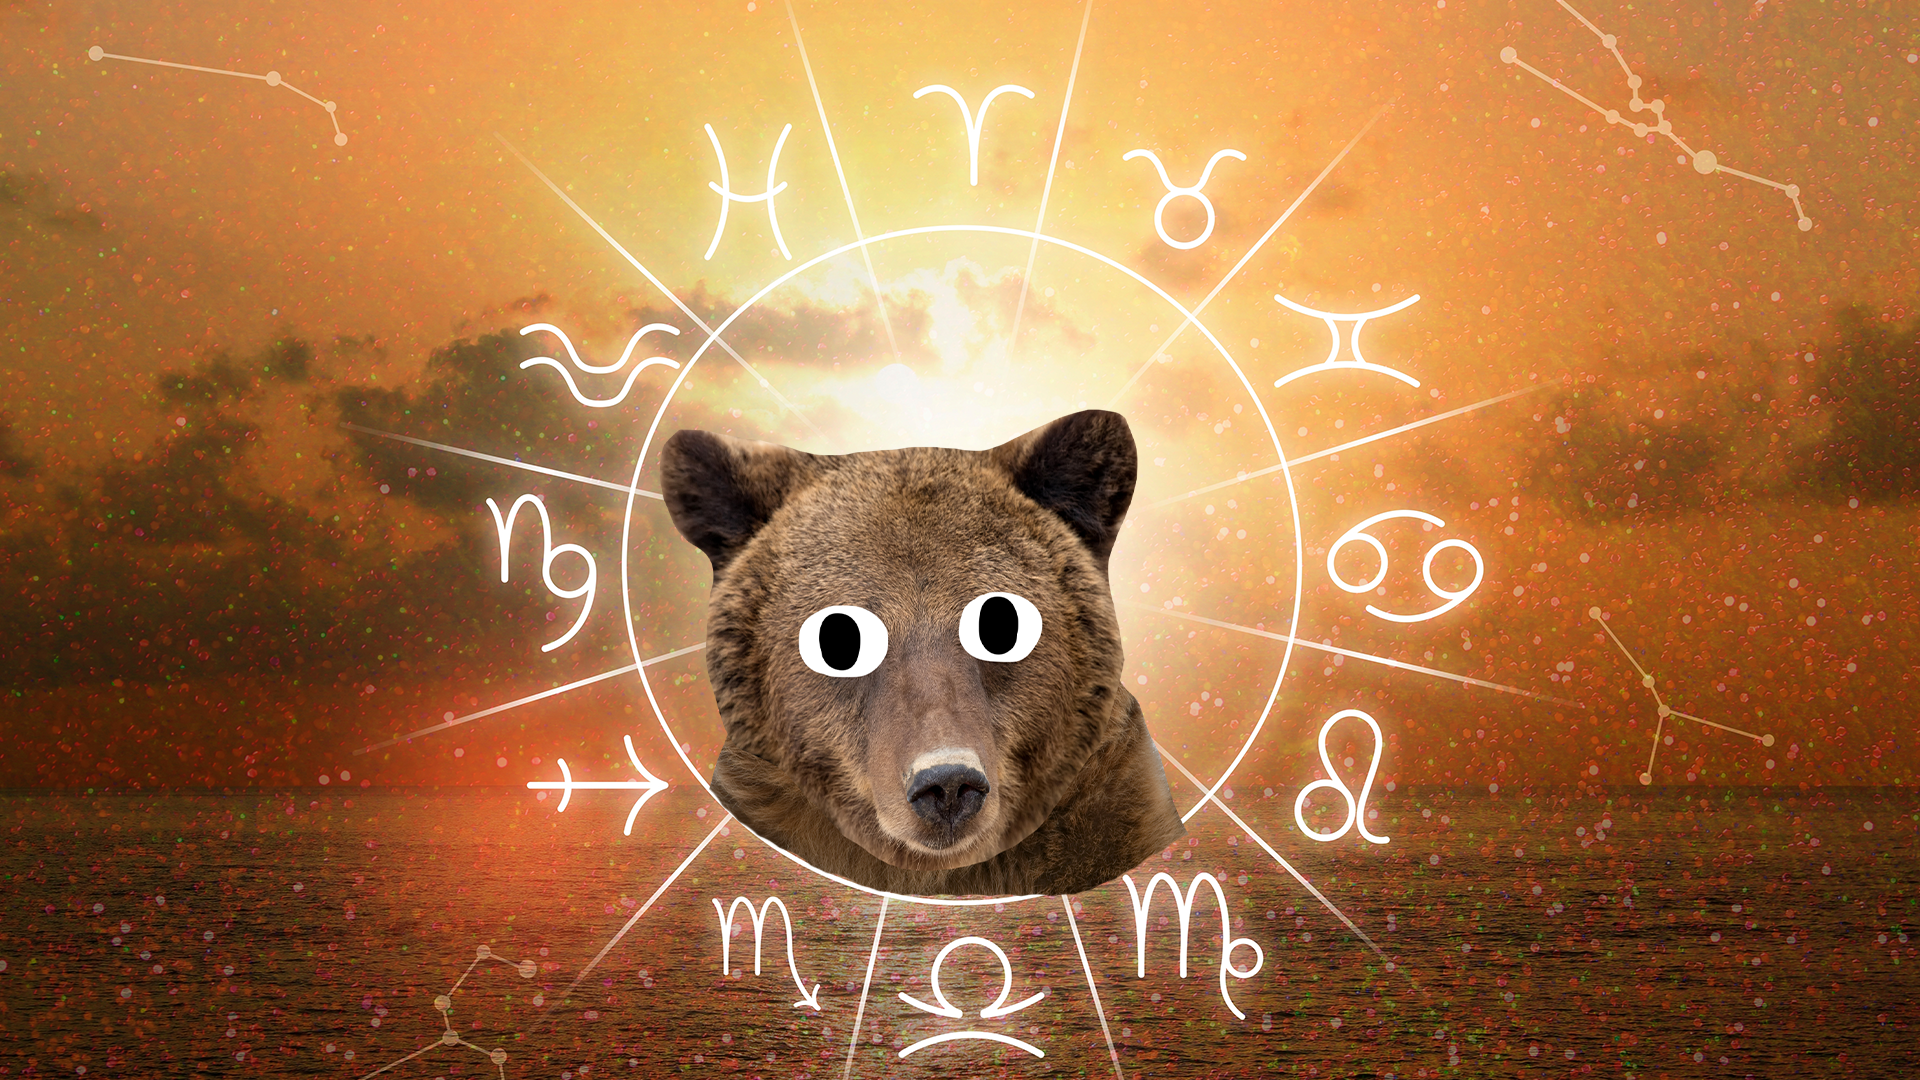 Bear and zodiac sign